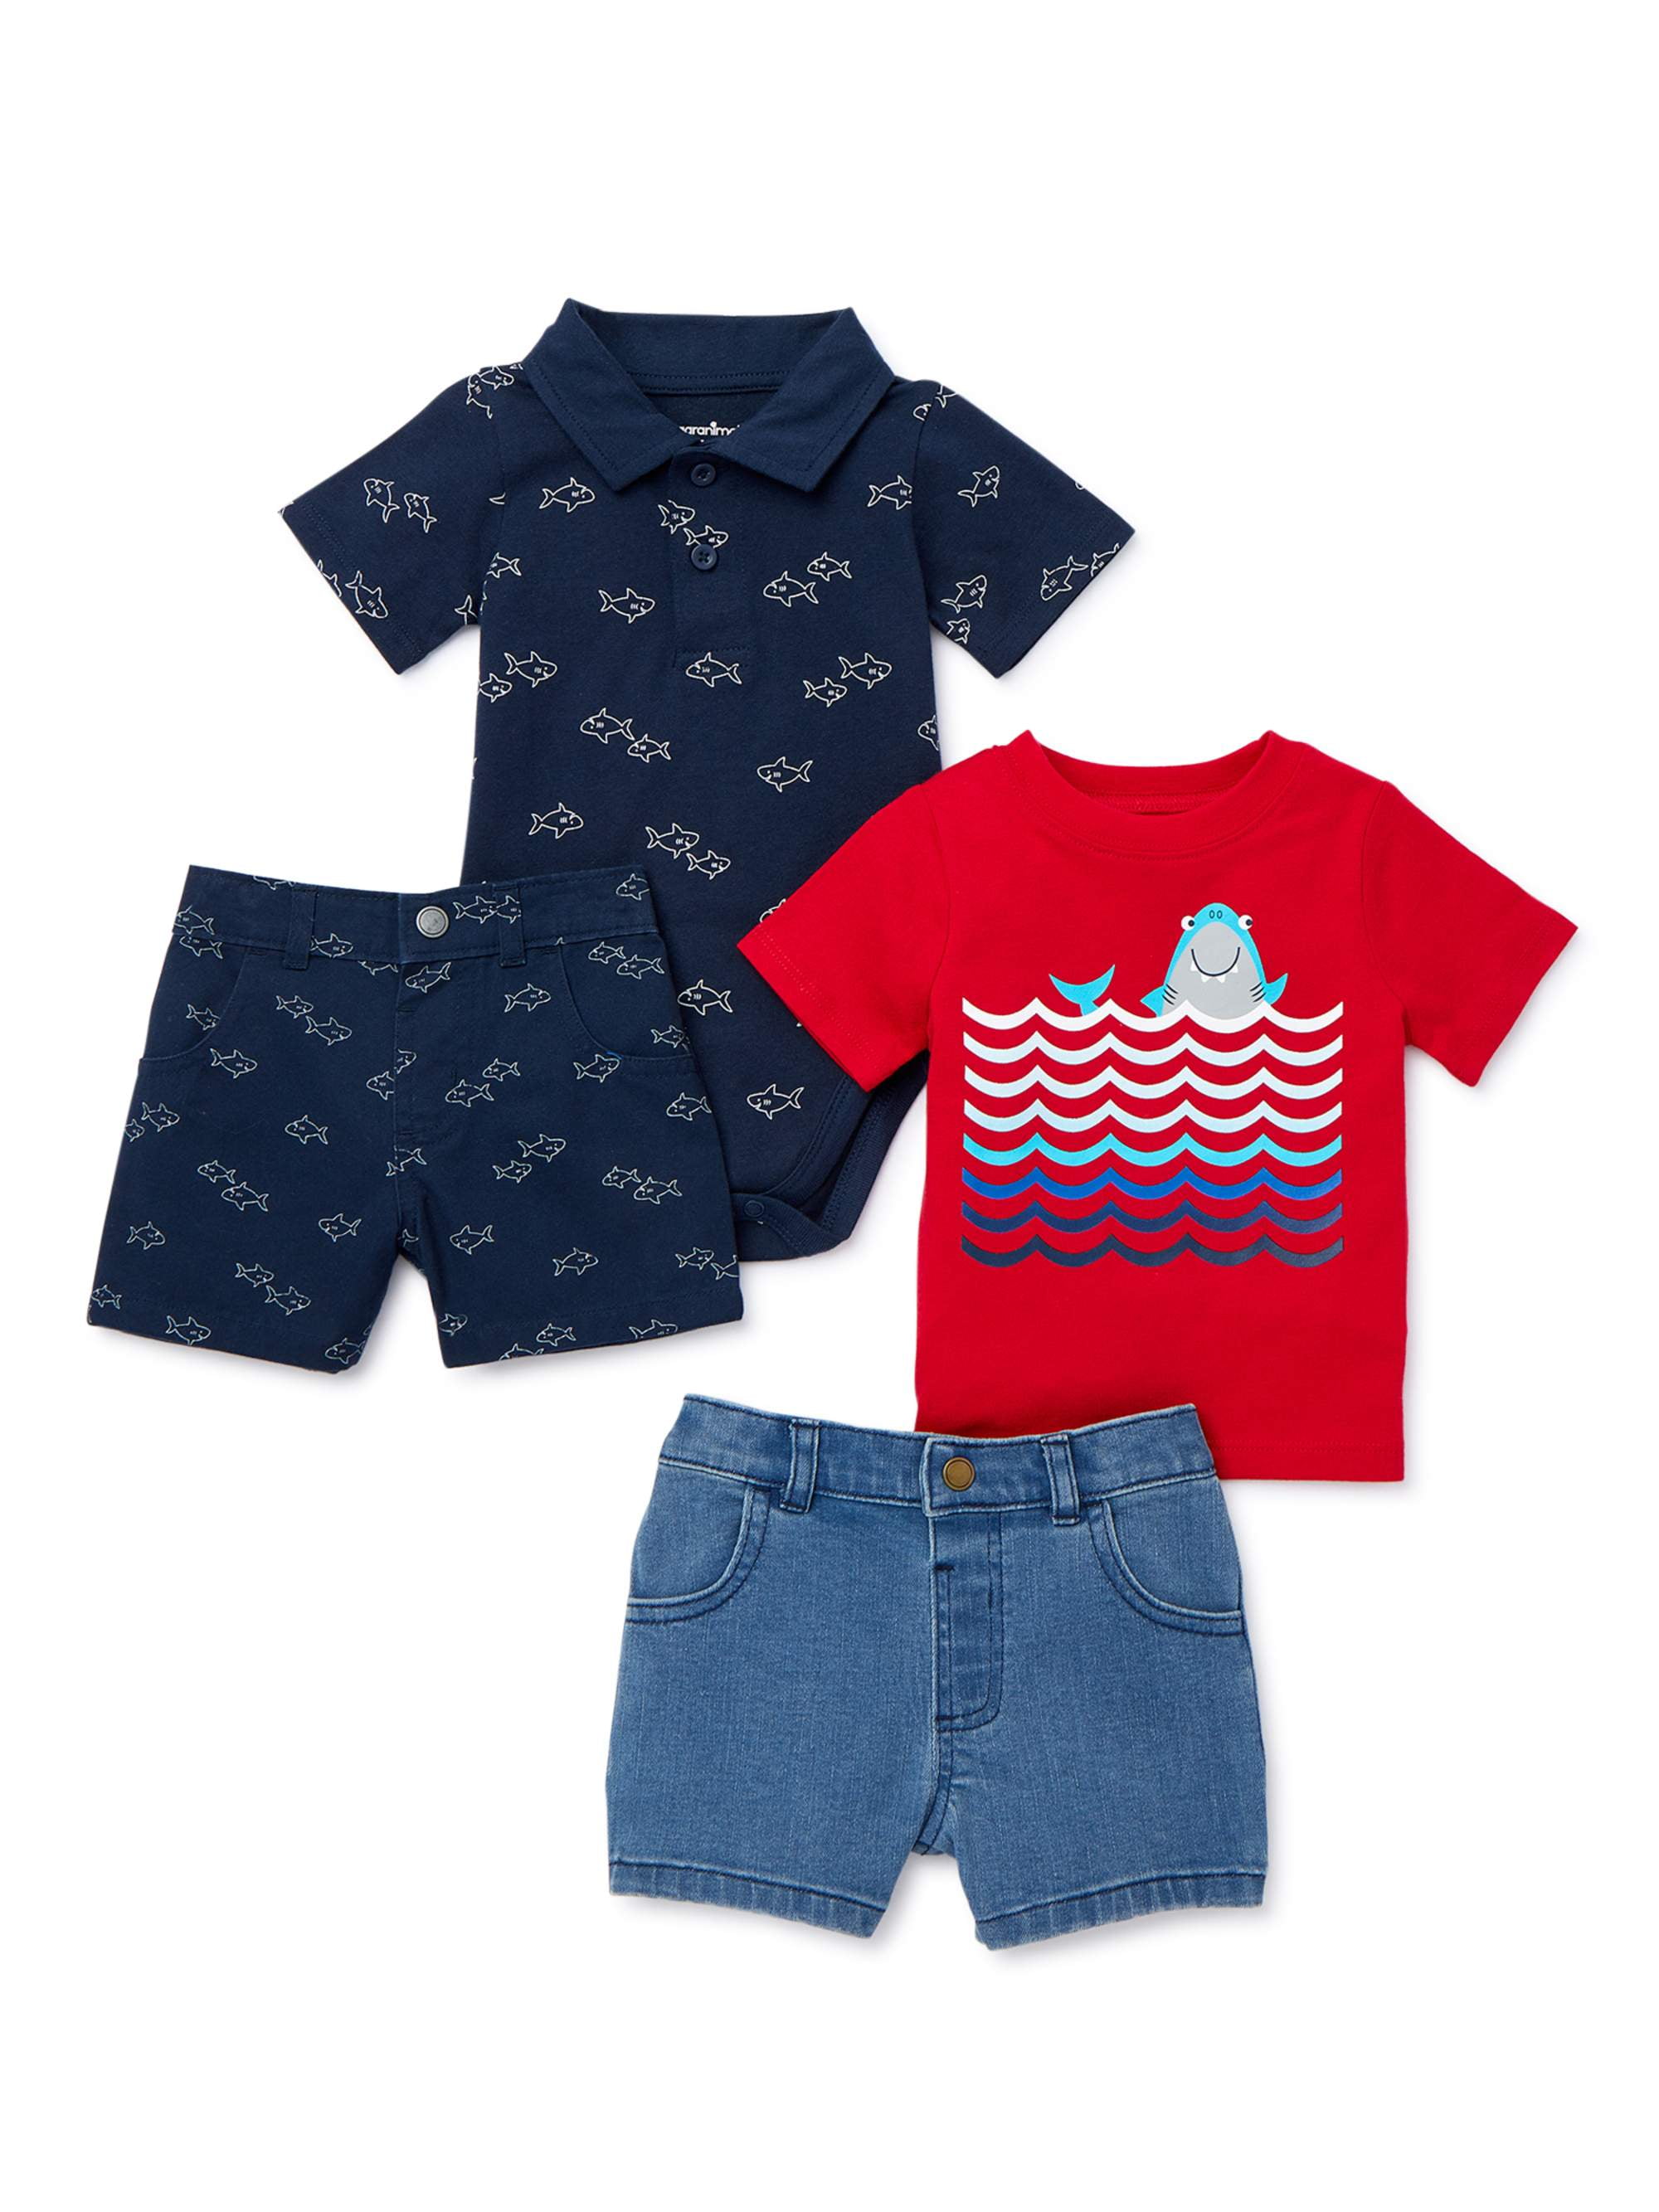 Toddler Kids Baby Boy Summer Short Sleeve Tree Pattern Shirt Tops+Denim Pant Set